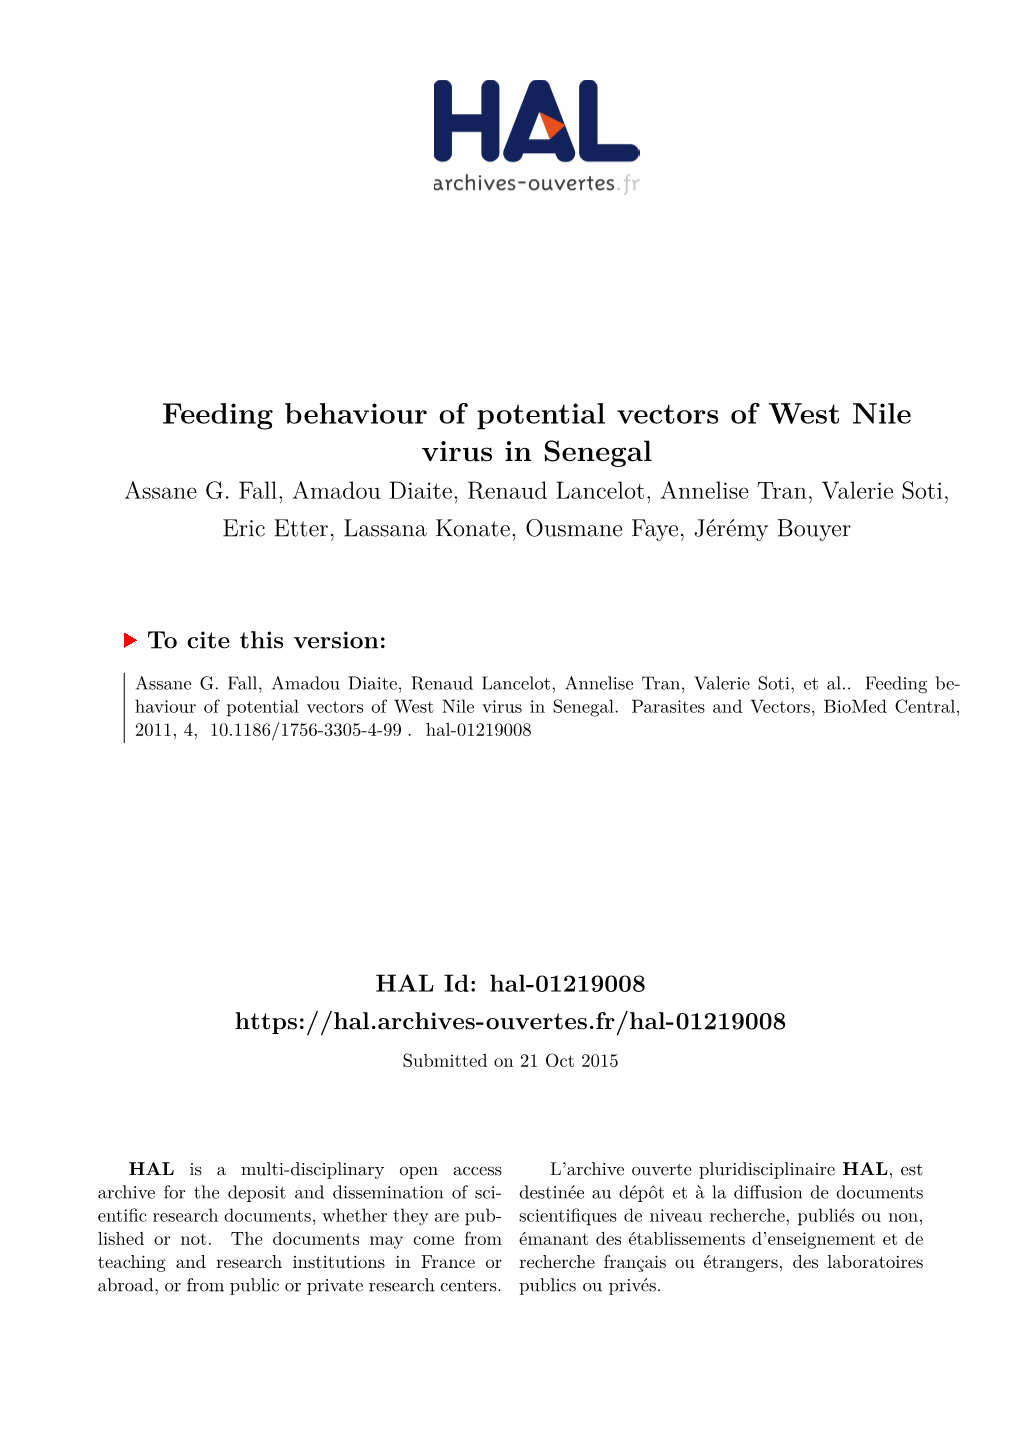 Feeding Behaviour of Potential Vectors of West Nile Virus in Senegal Assane G